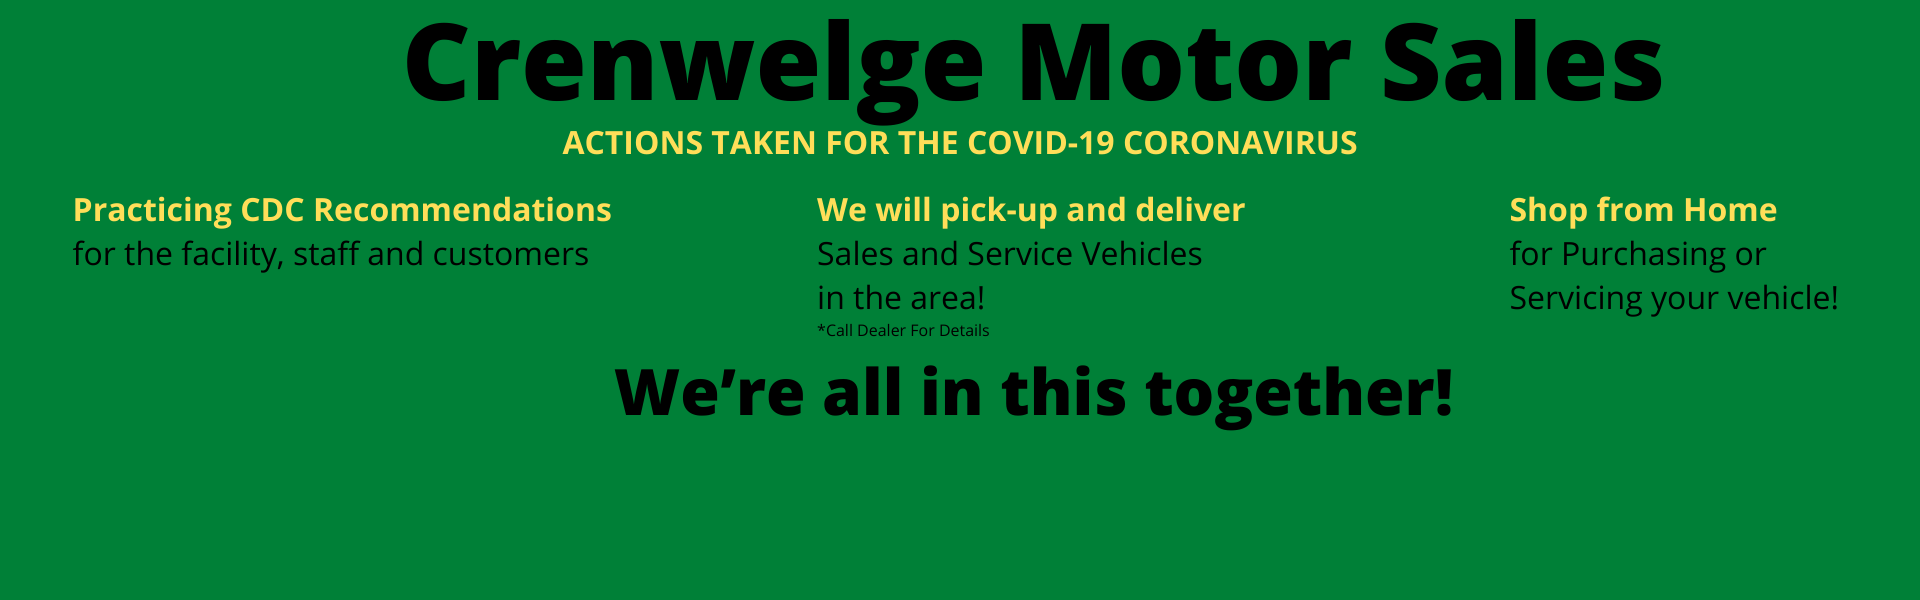 Crenwelge Motor Sales COVID-19